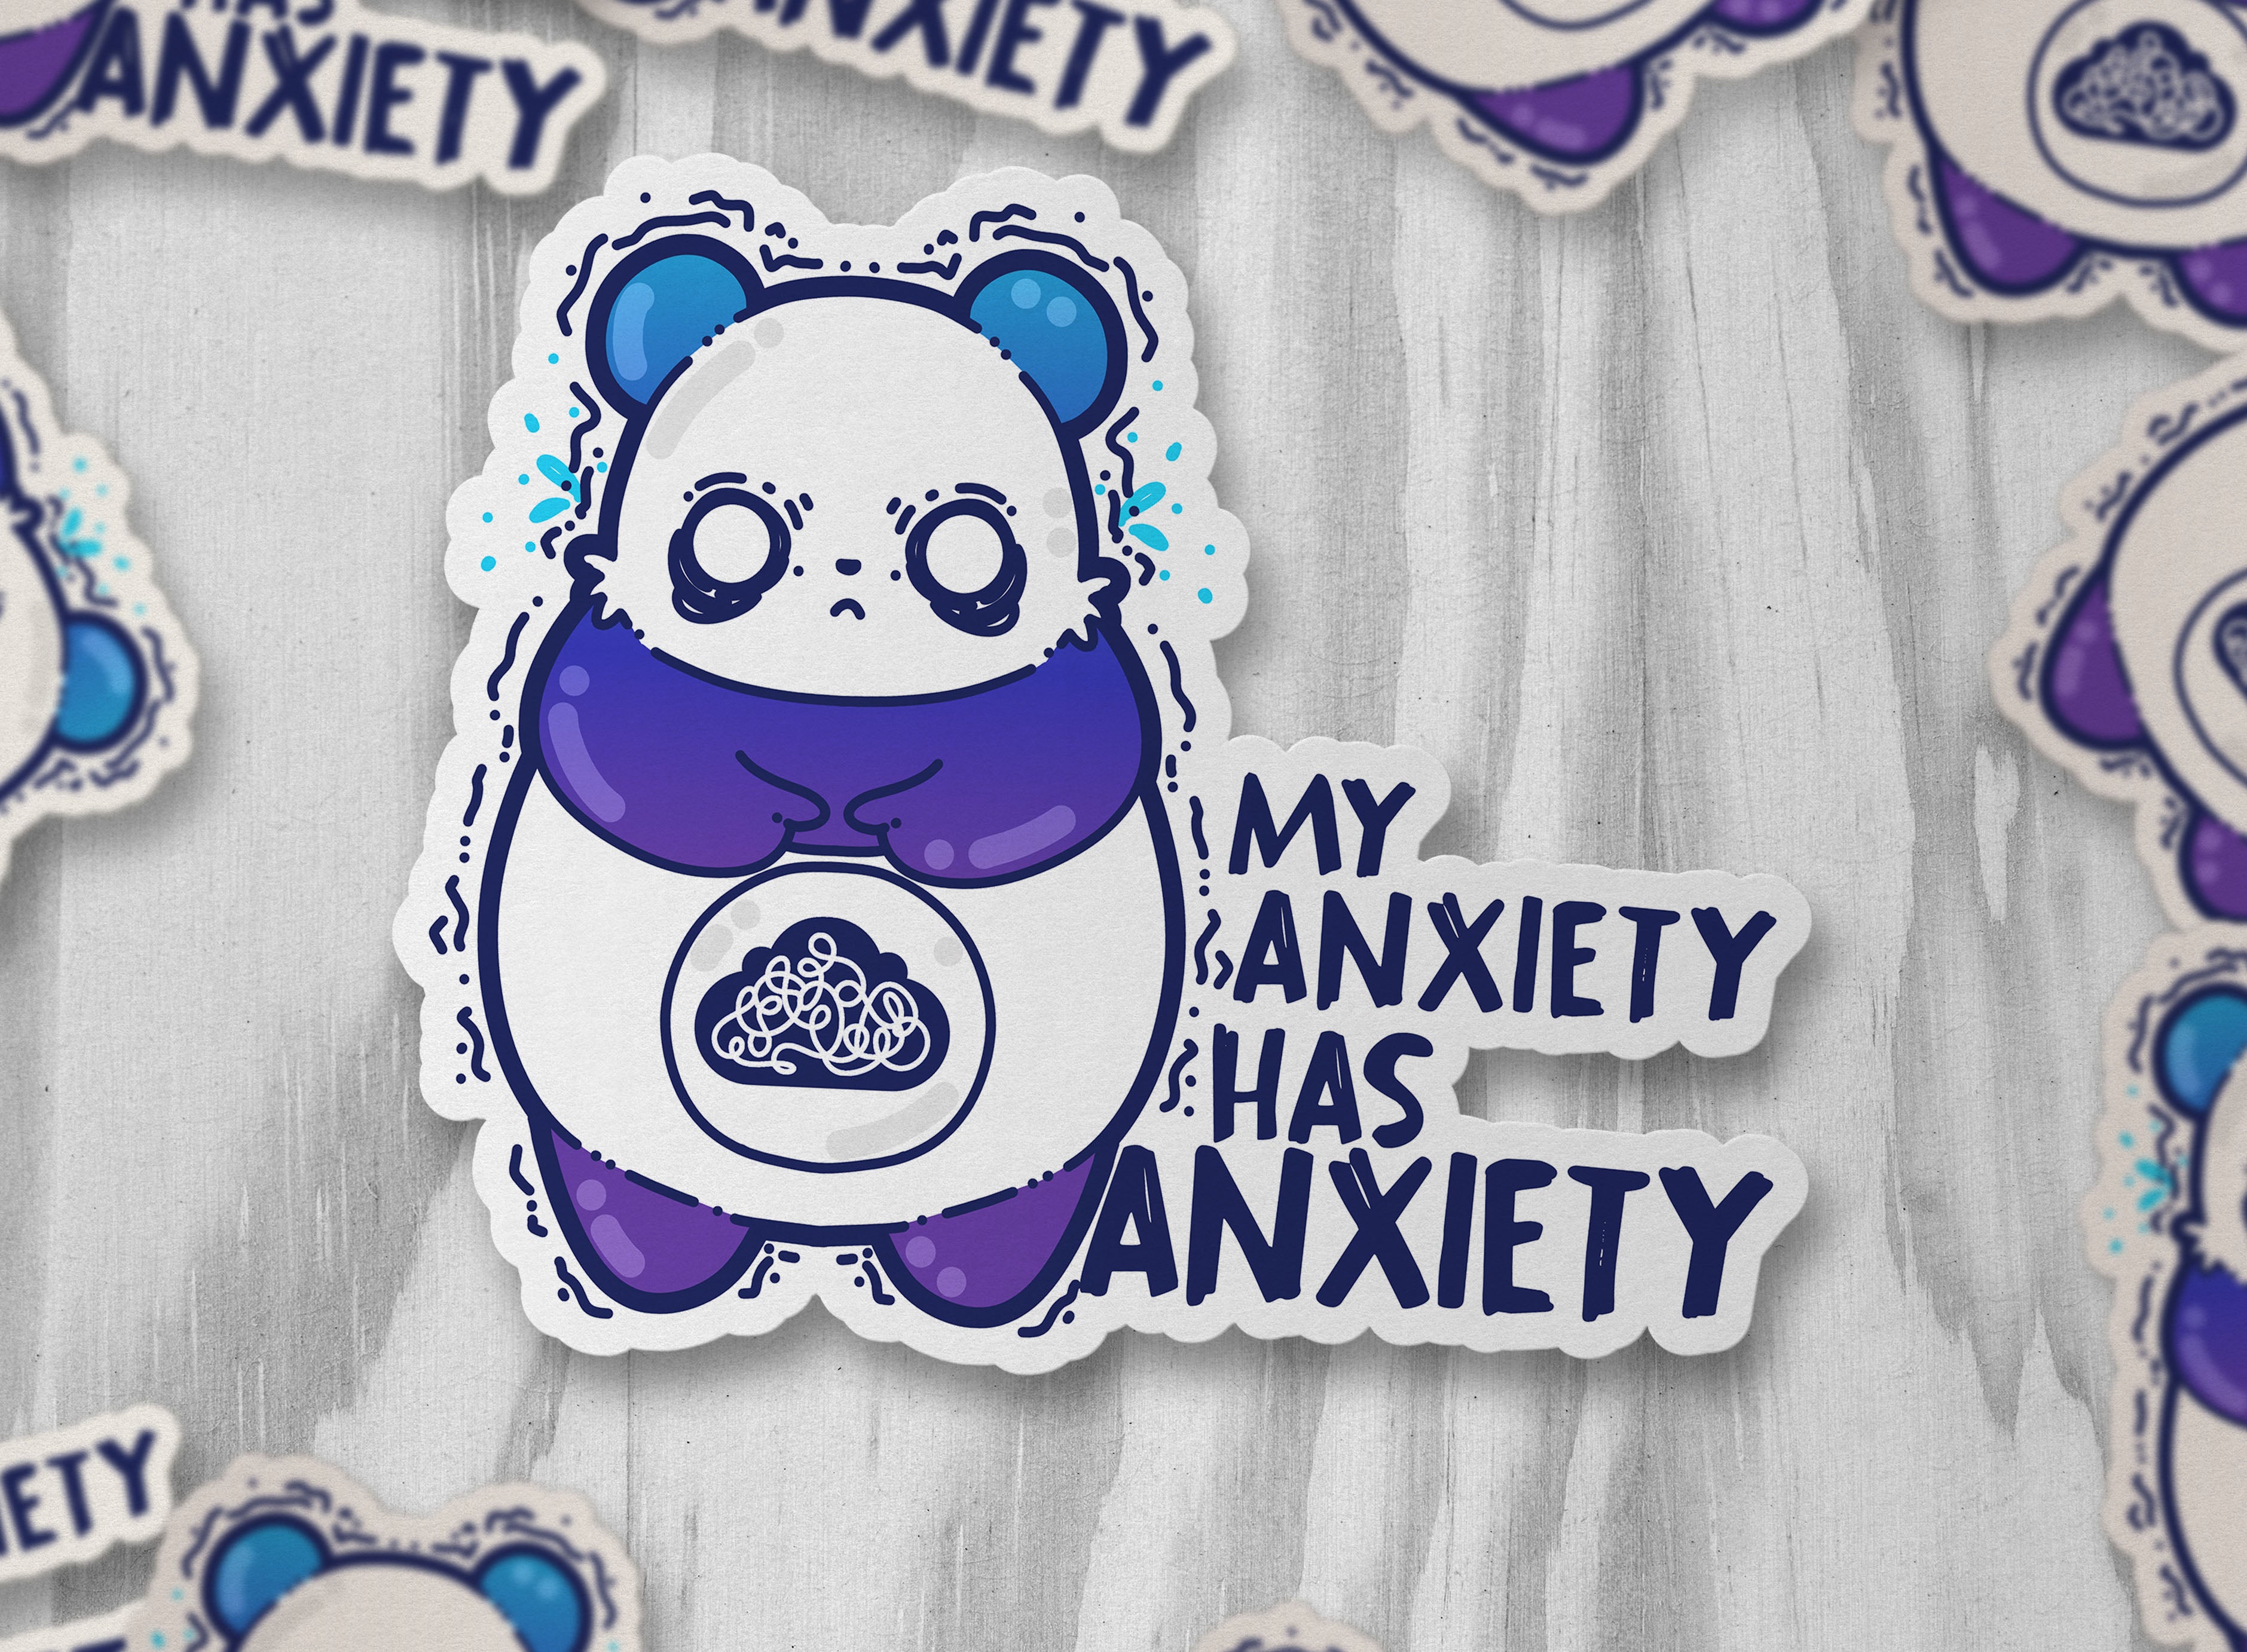 My Anxiety Has Anxiety - ChubbleGumLLC